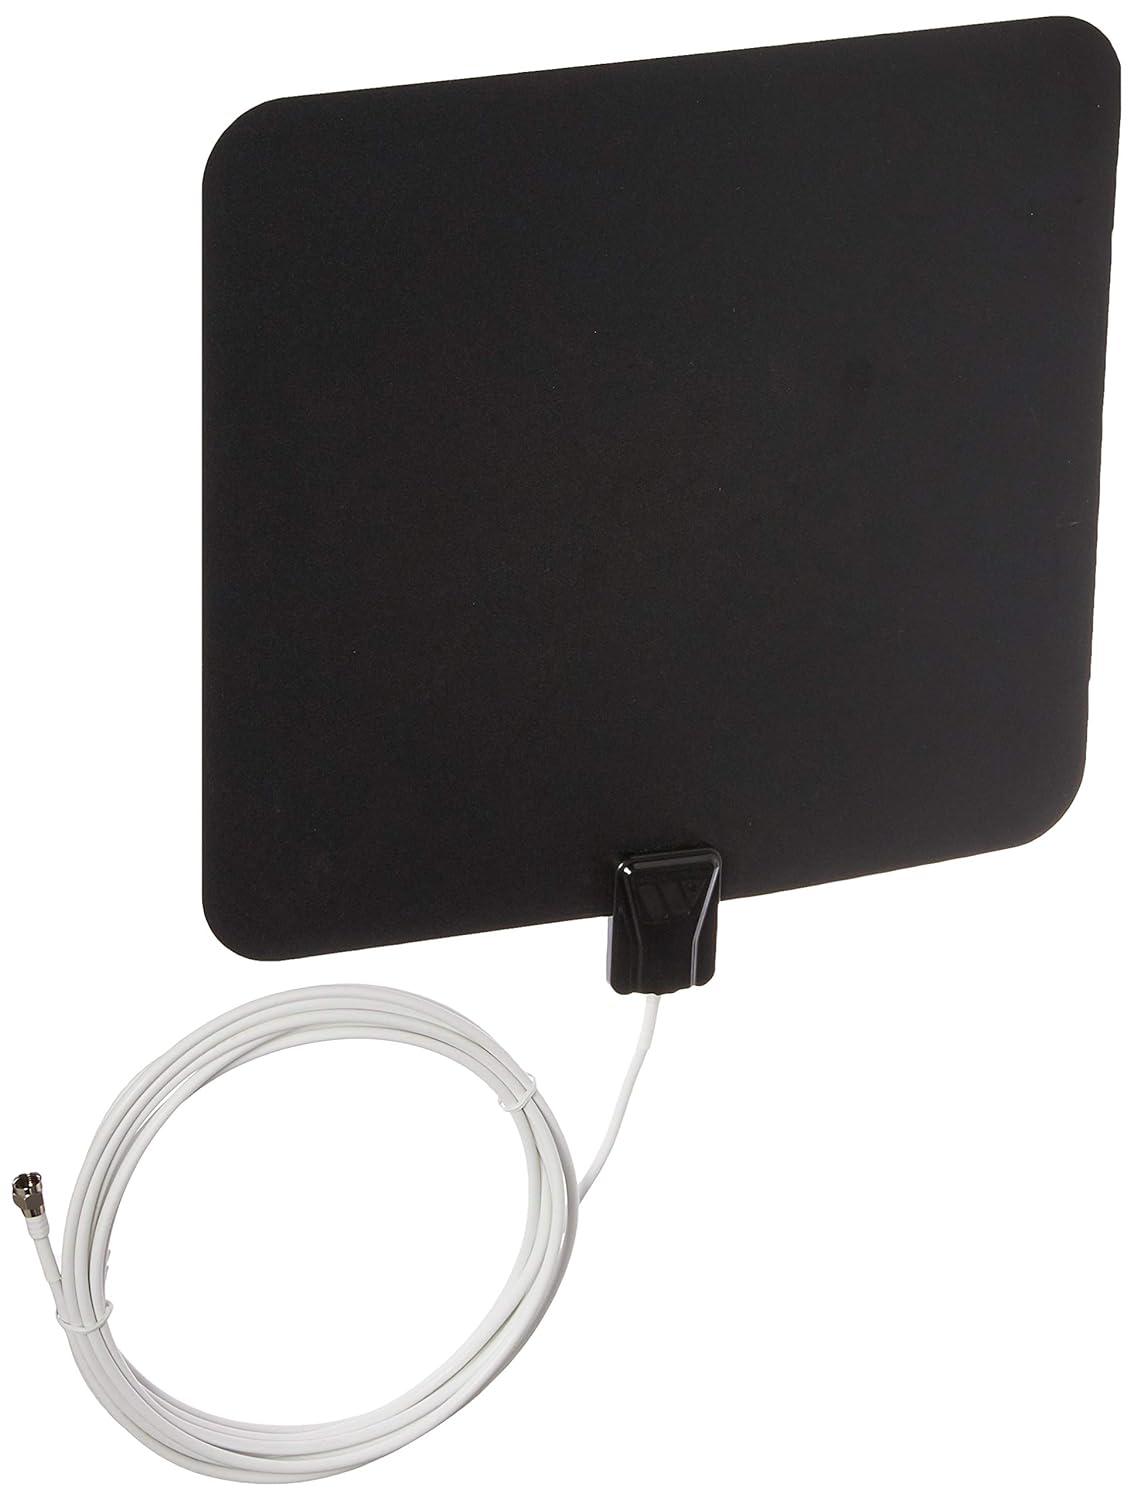 winegard fl-5000 flatwave digital indoor hdtv antenna (4k ready / high-vhf / uhf / ultra-thin), 35 mile long range, black/whi